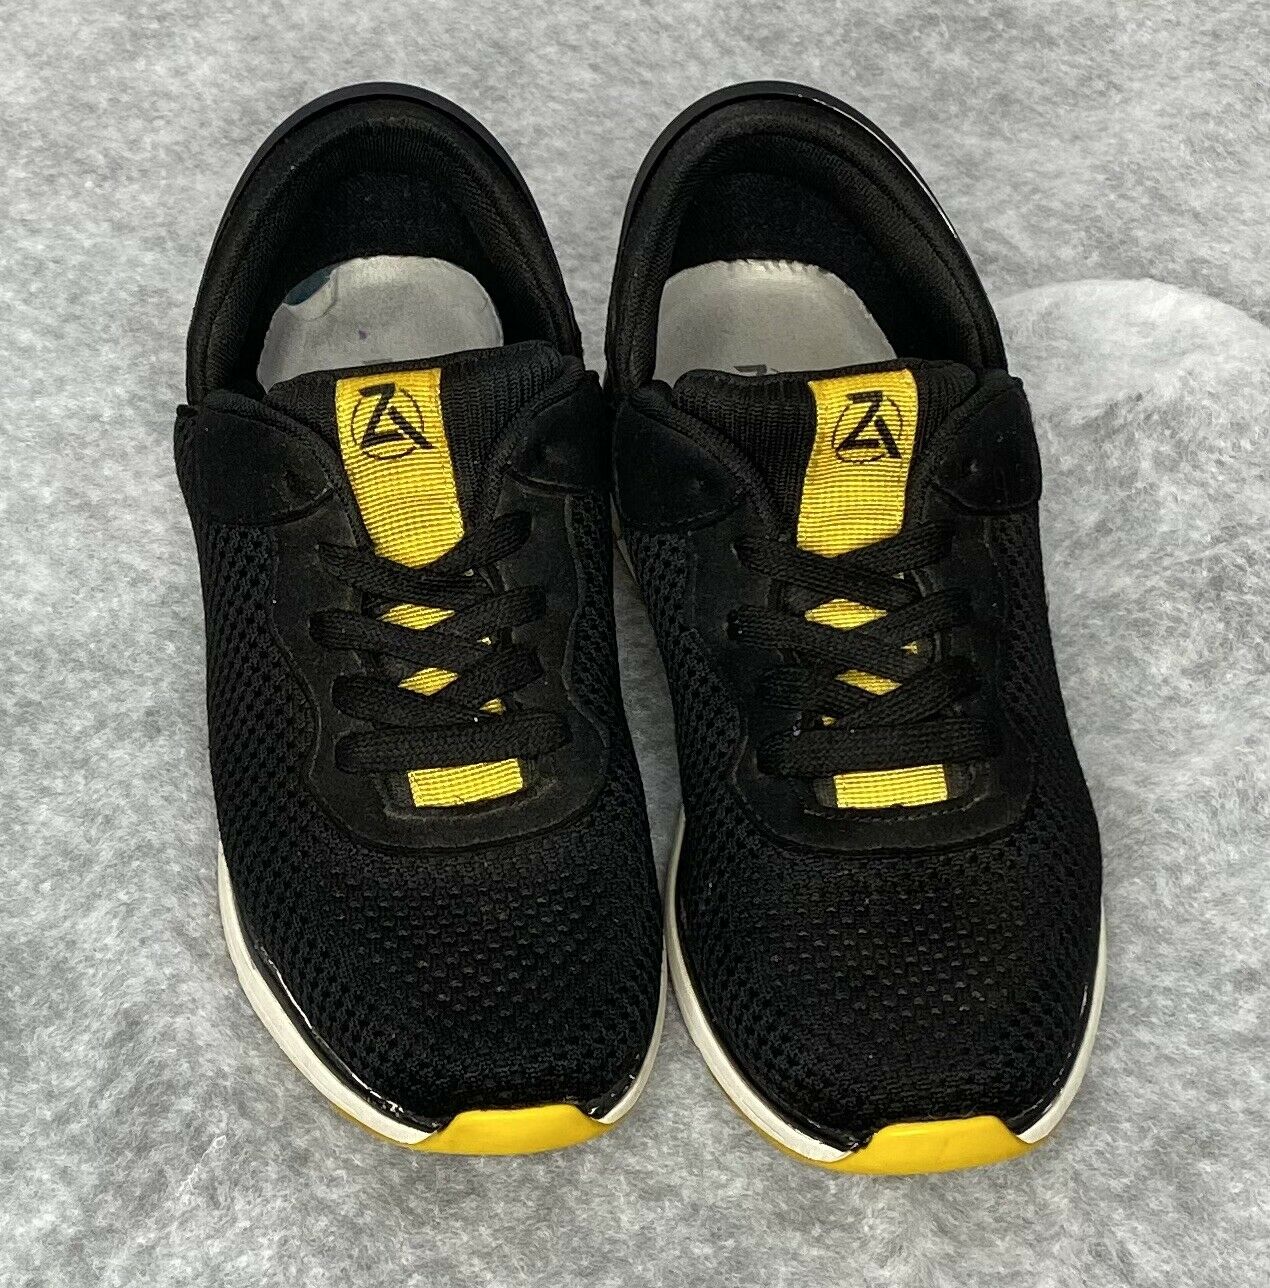 Zeba Hands Free Electric Black Athletic Sneaker Shoes Slip On Size Men's Size 9